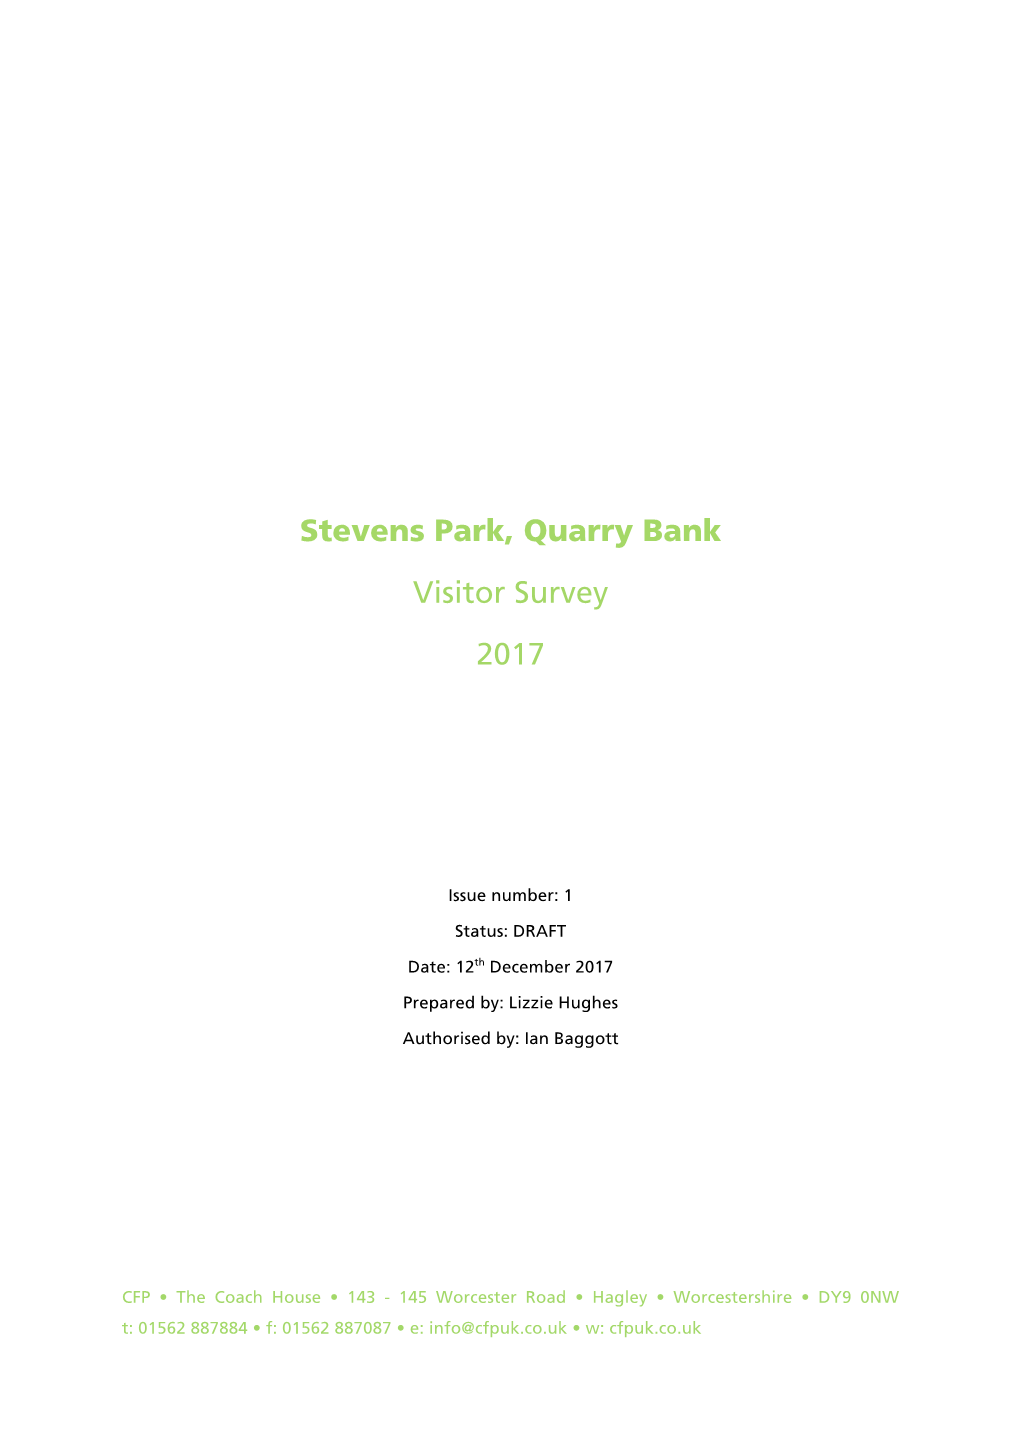 Stevens Park, Quarry Bank Visitor Survey 2017